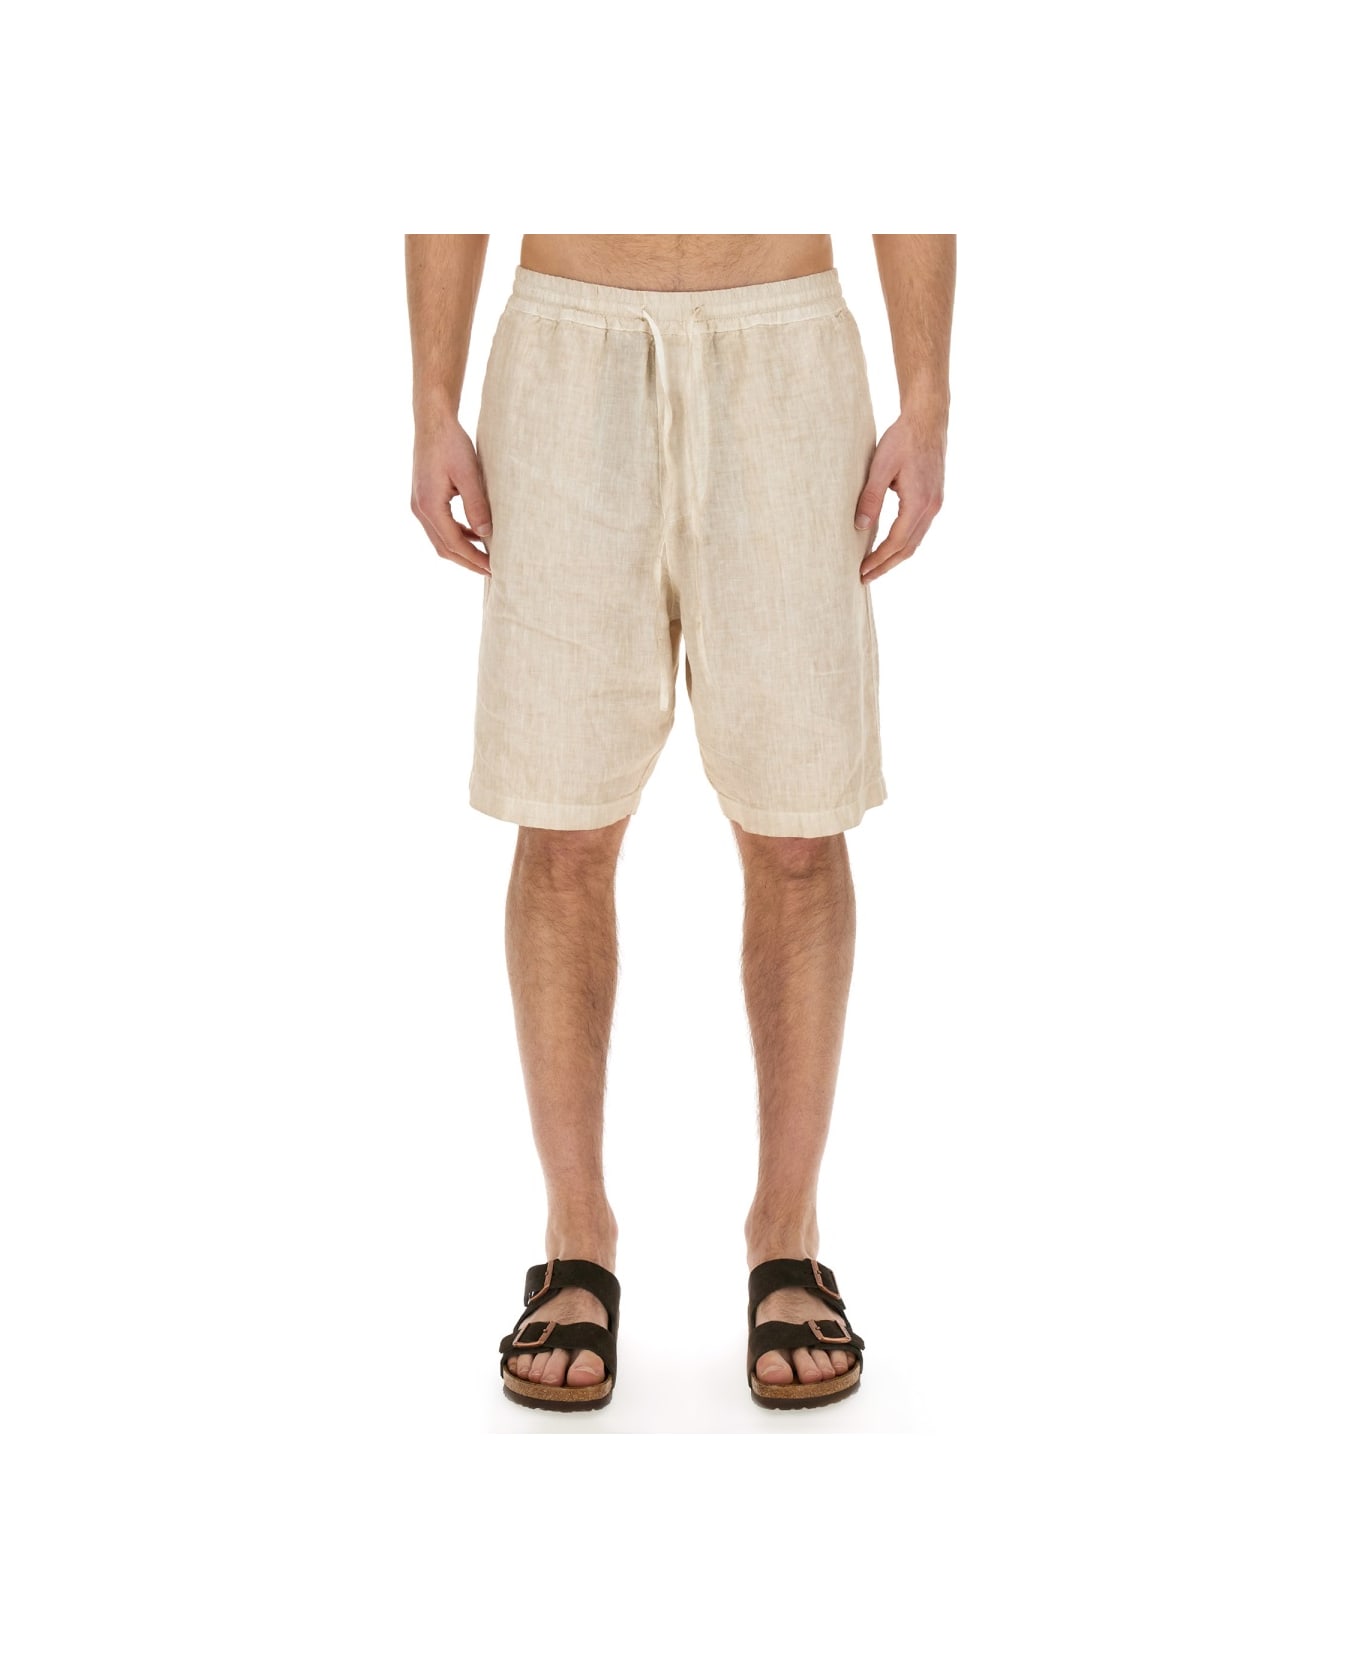 120% Lino Linen Bermuda Shorts - IVORY ショートパンツ